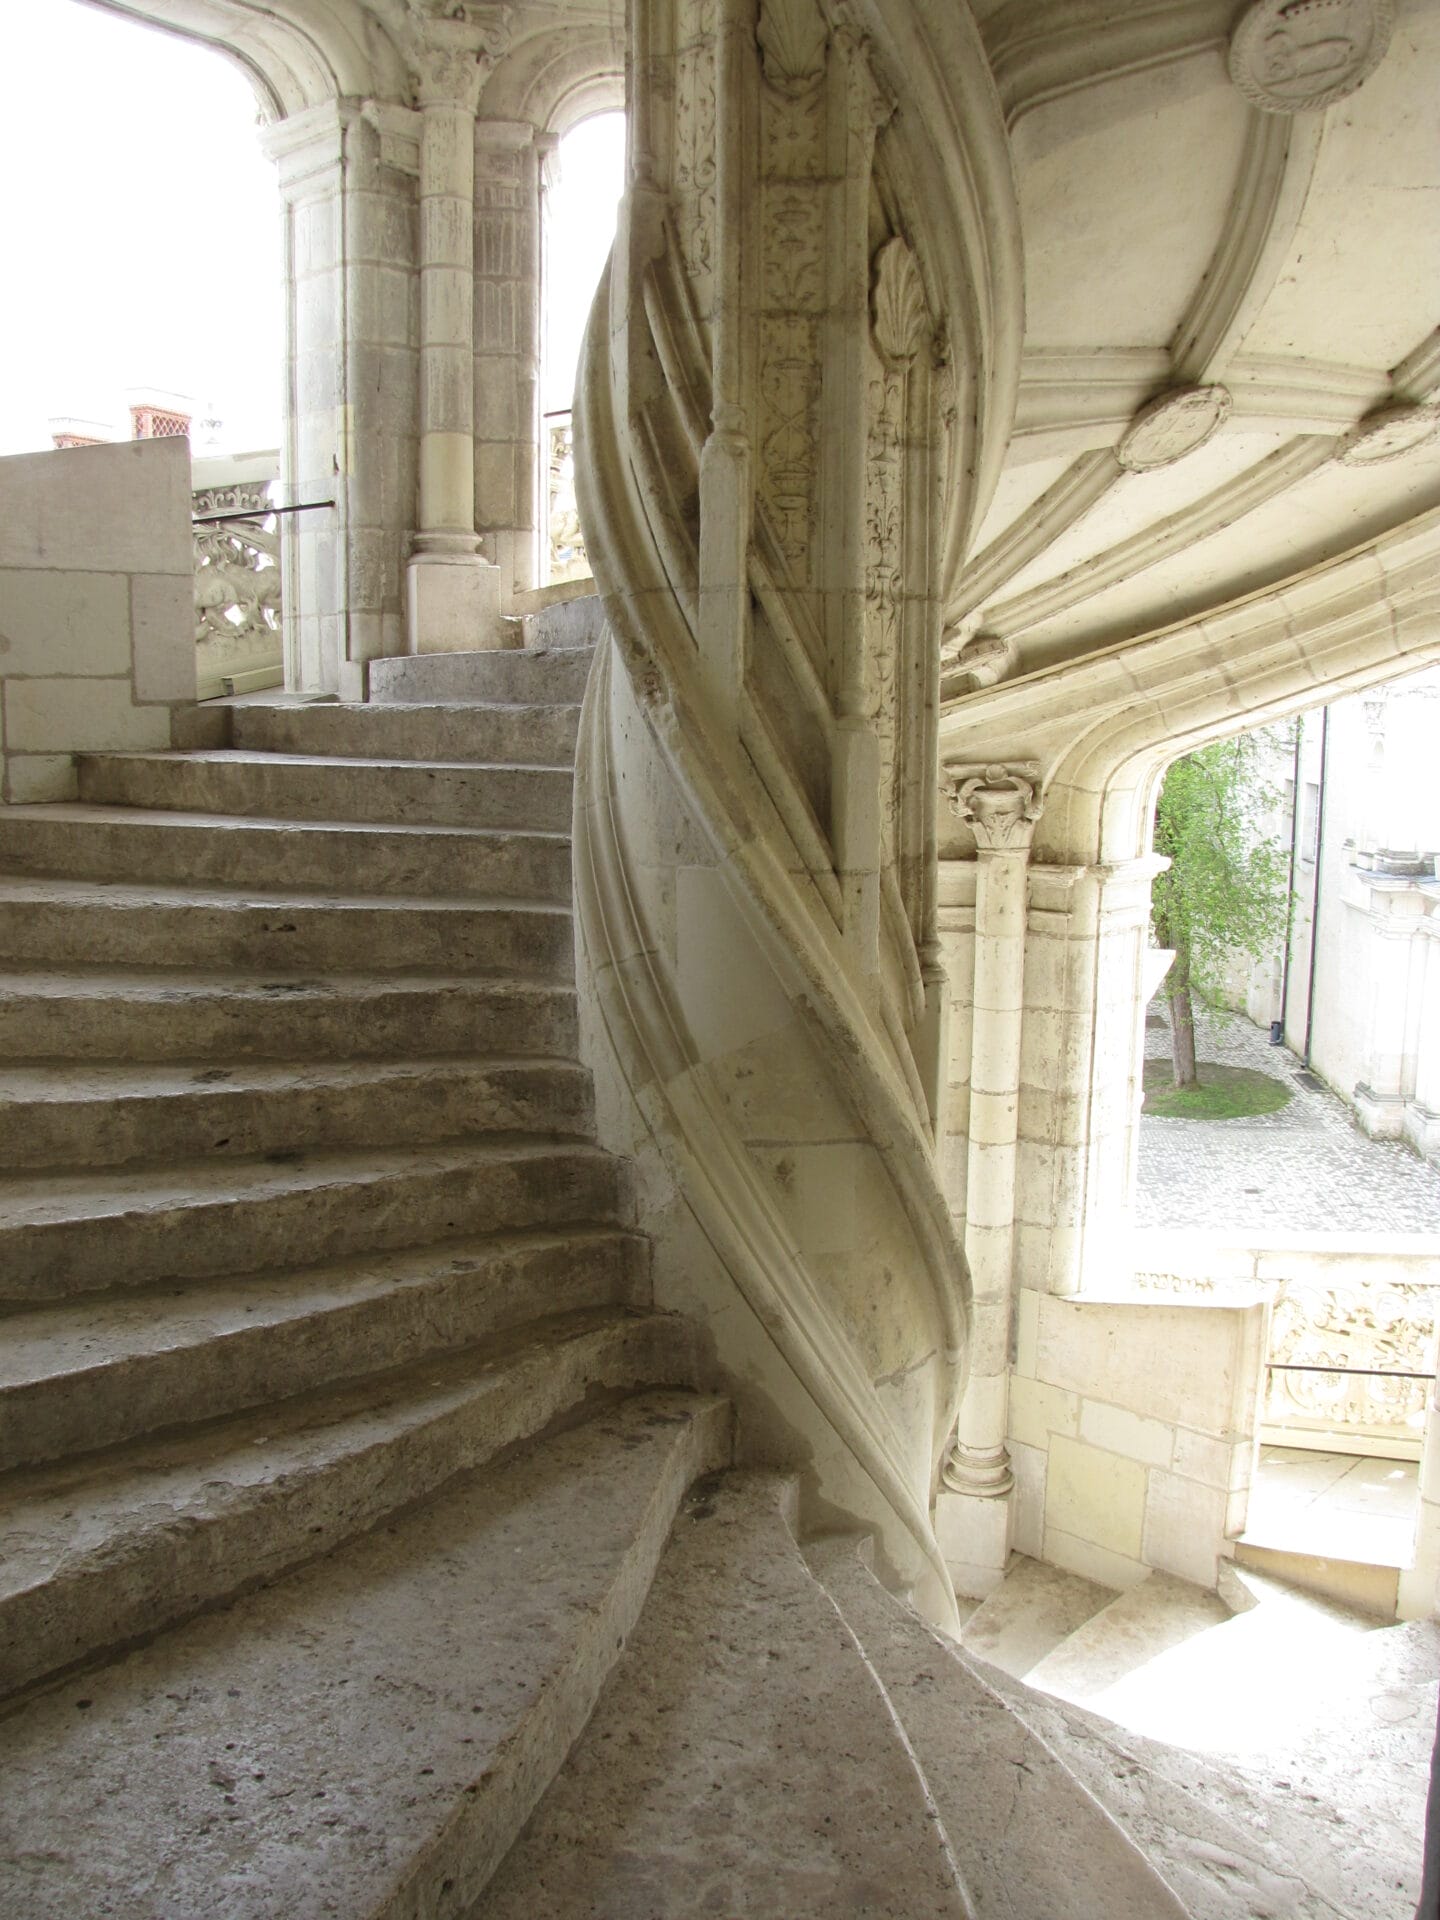 Chateau de Blois spiral staircase